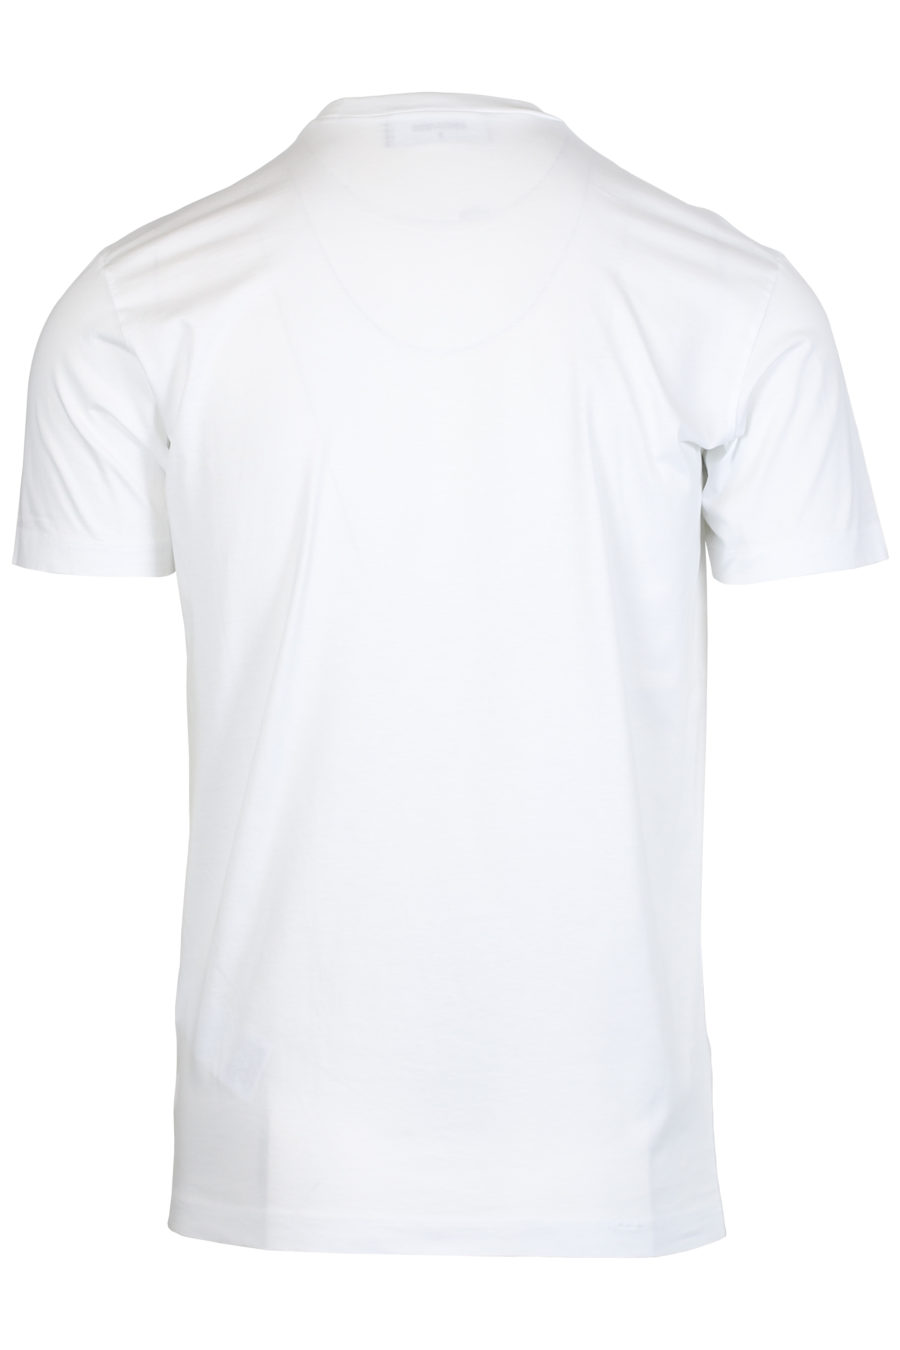 Camiseta blanca con logo pequeño "Ceresio 9" - IMG 2433